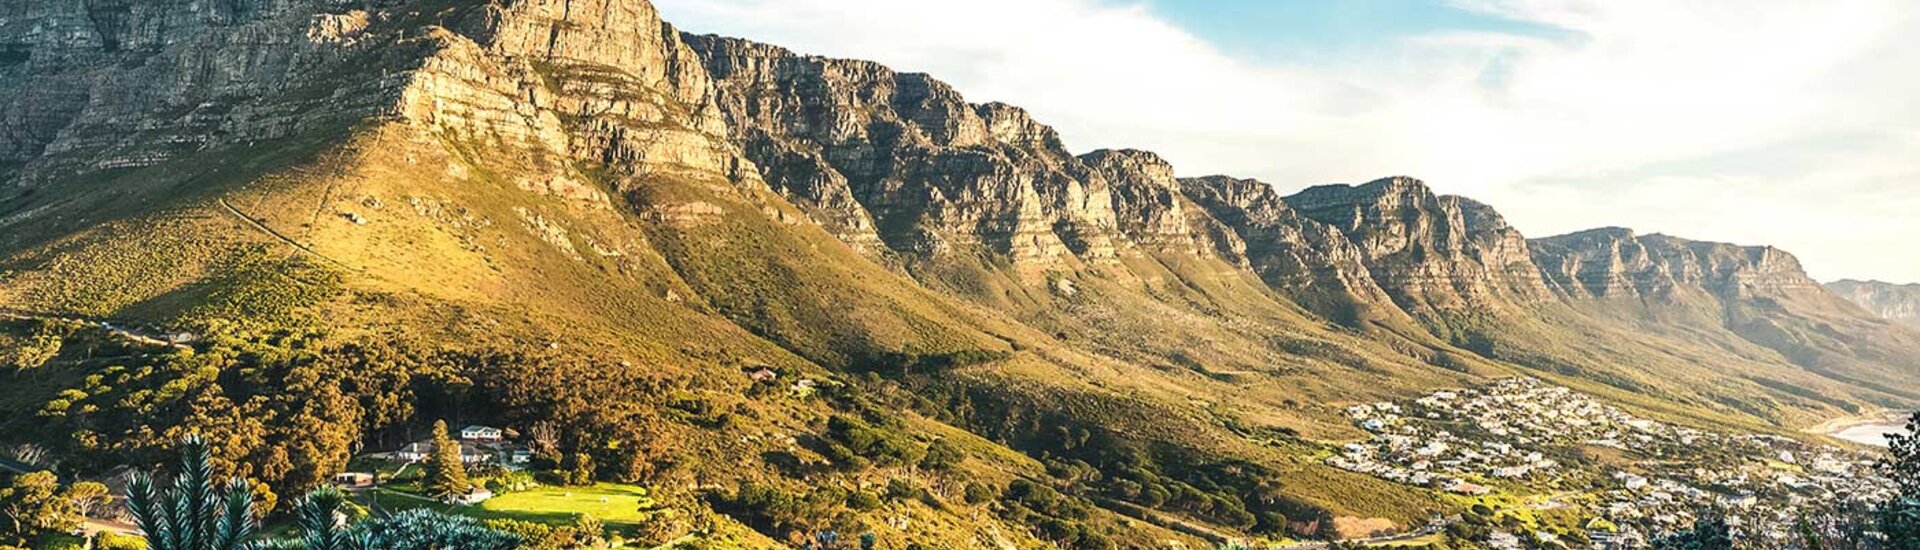 Tafelberg in Südafrika